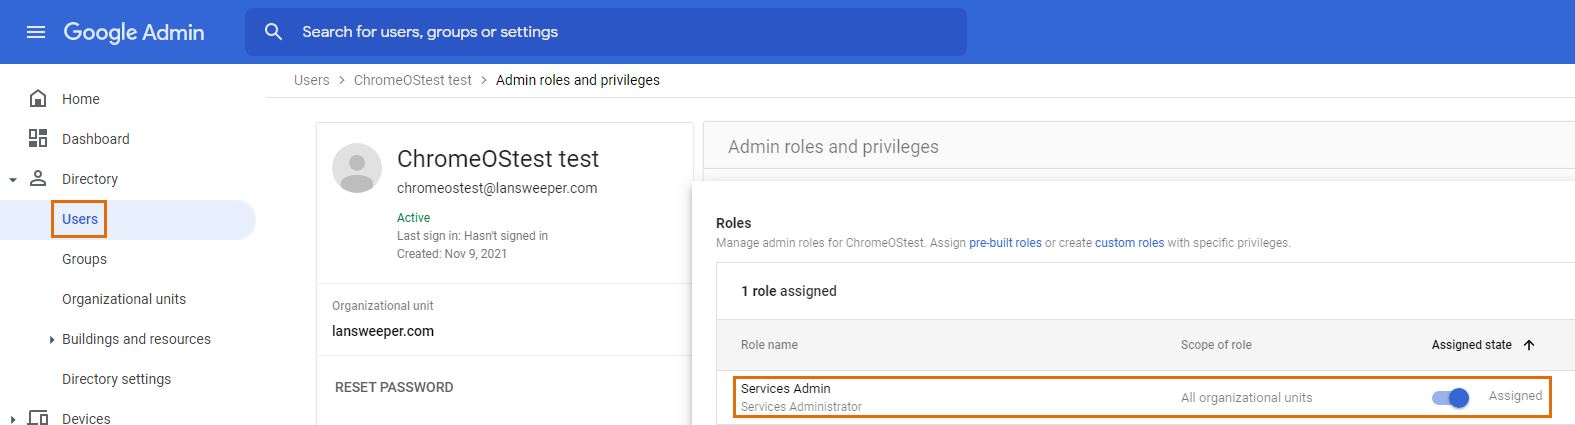 Google Admin Services Admin user